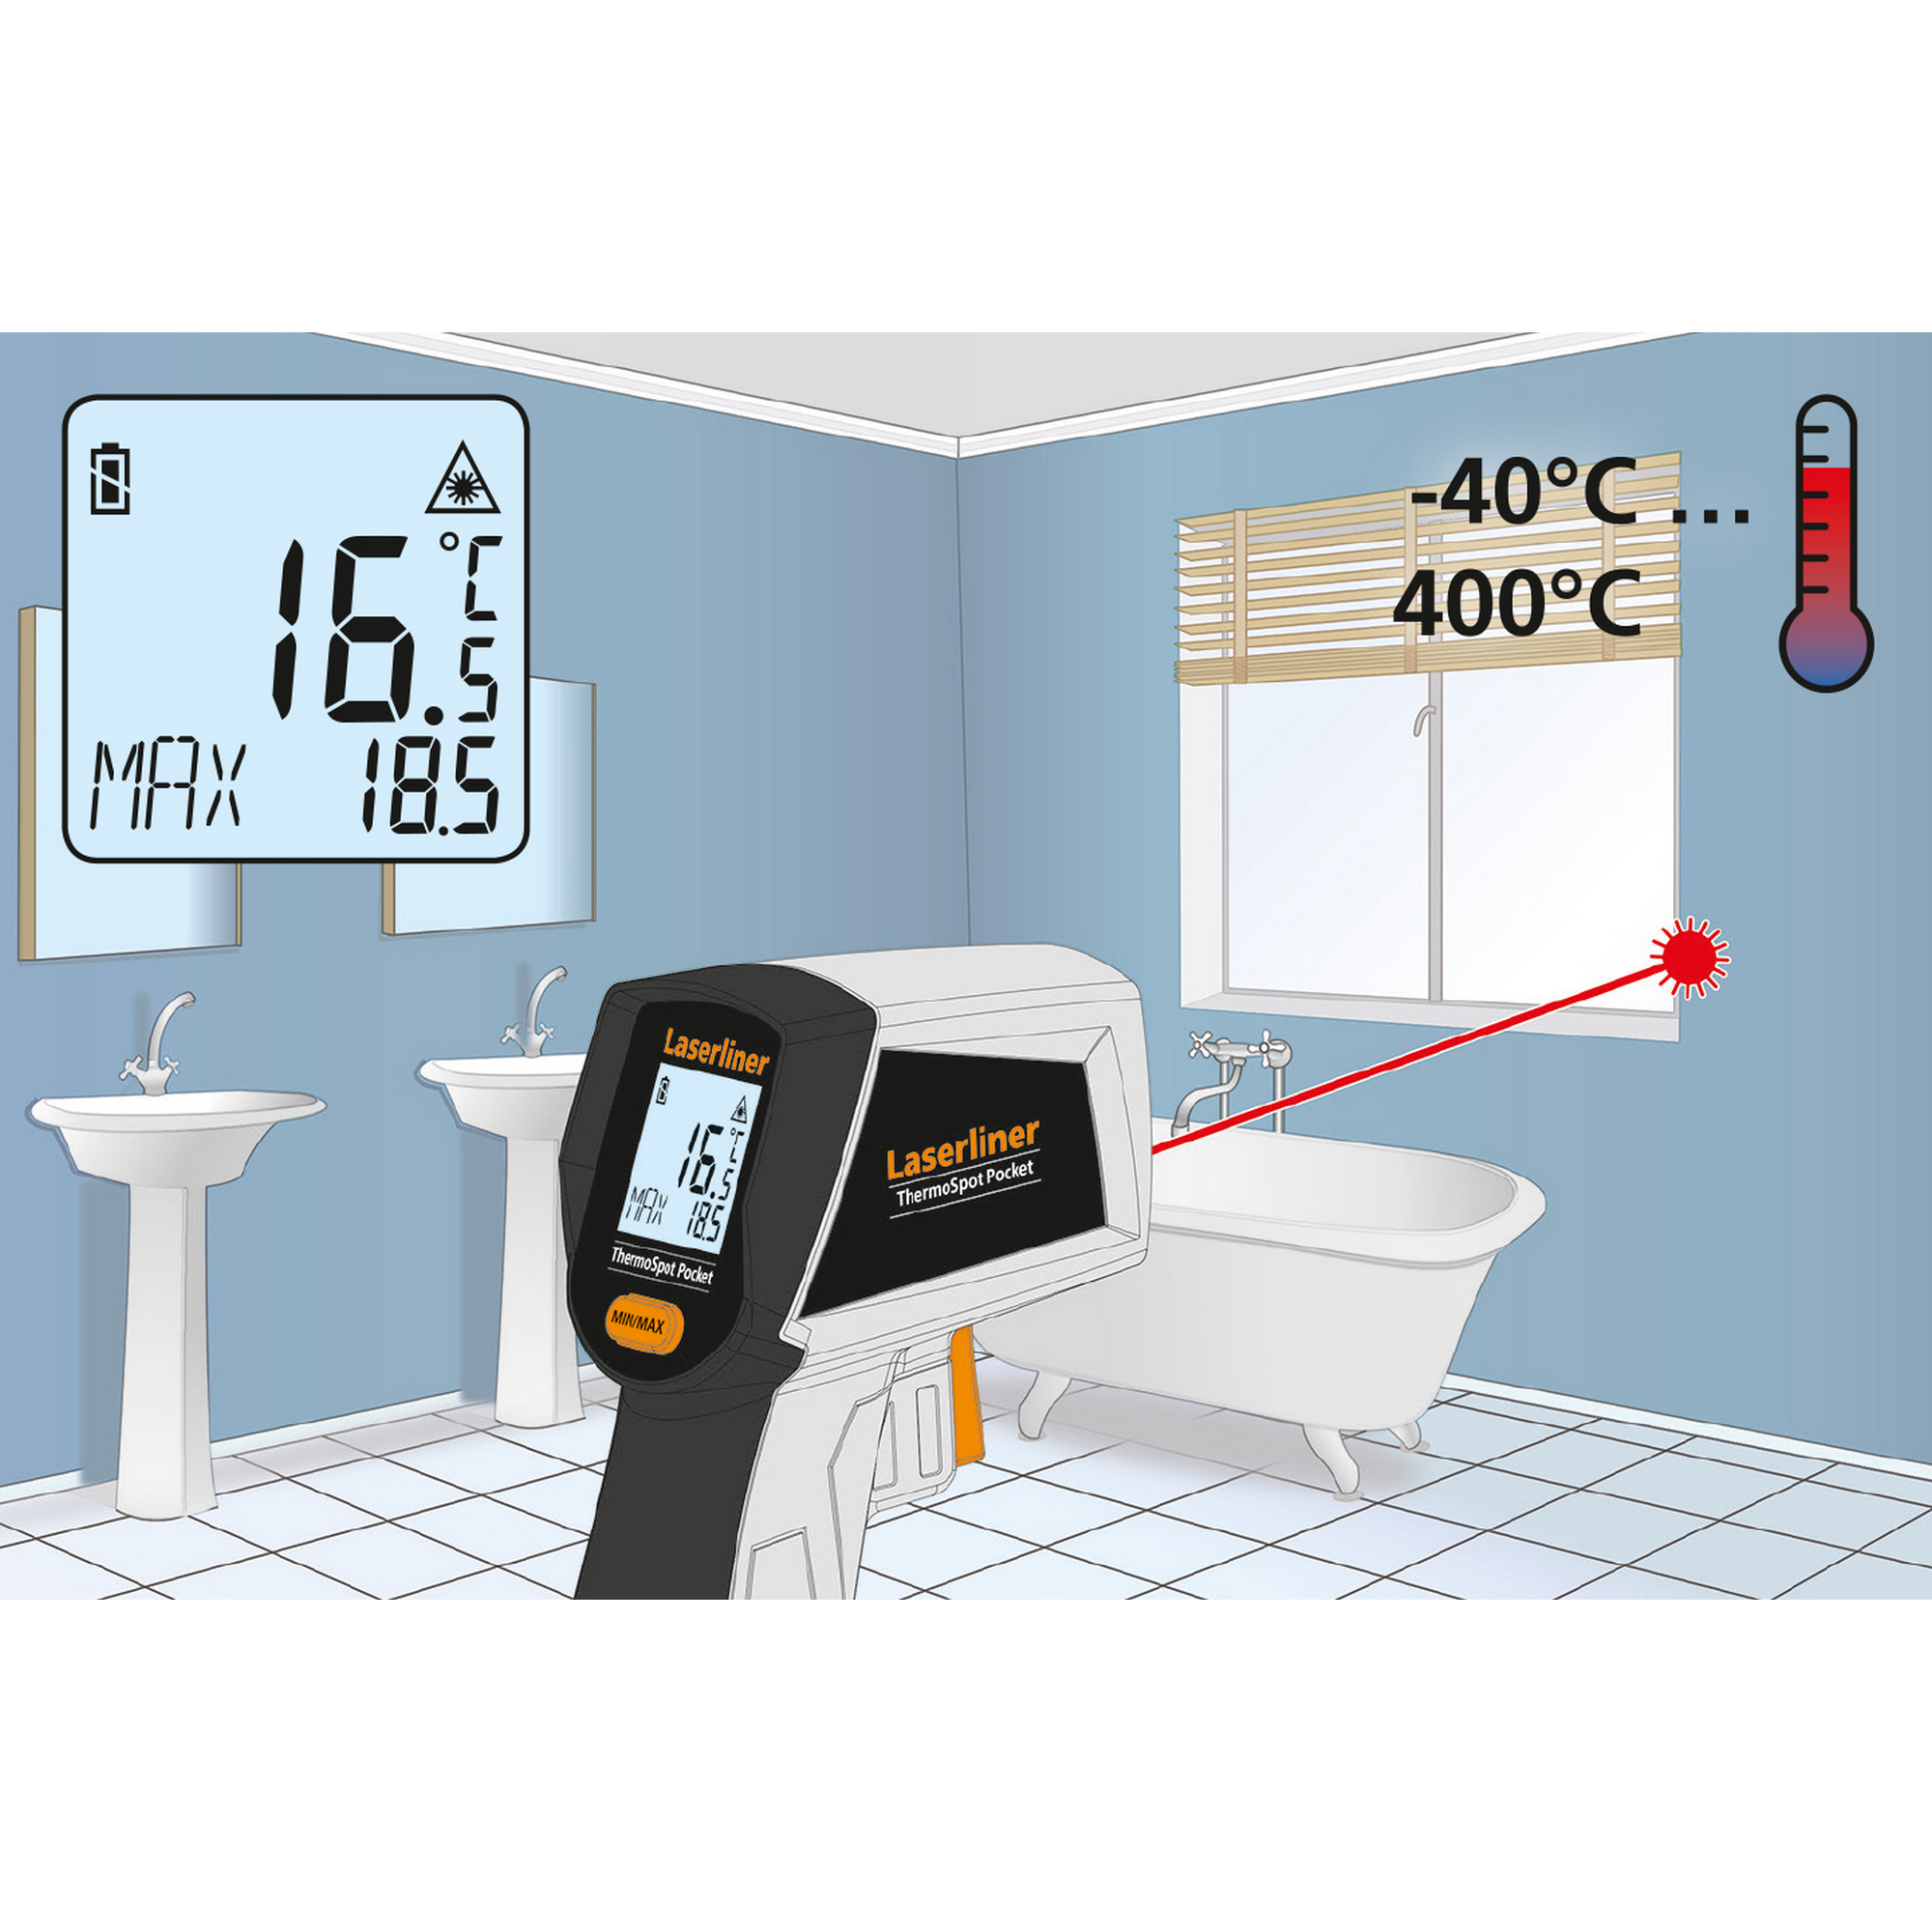 Infrarot-Temperaturmessgerät 'ThermoSpot Pocket' + product picture